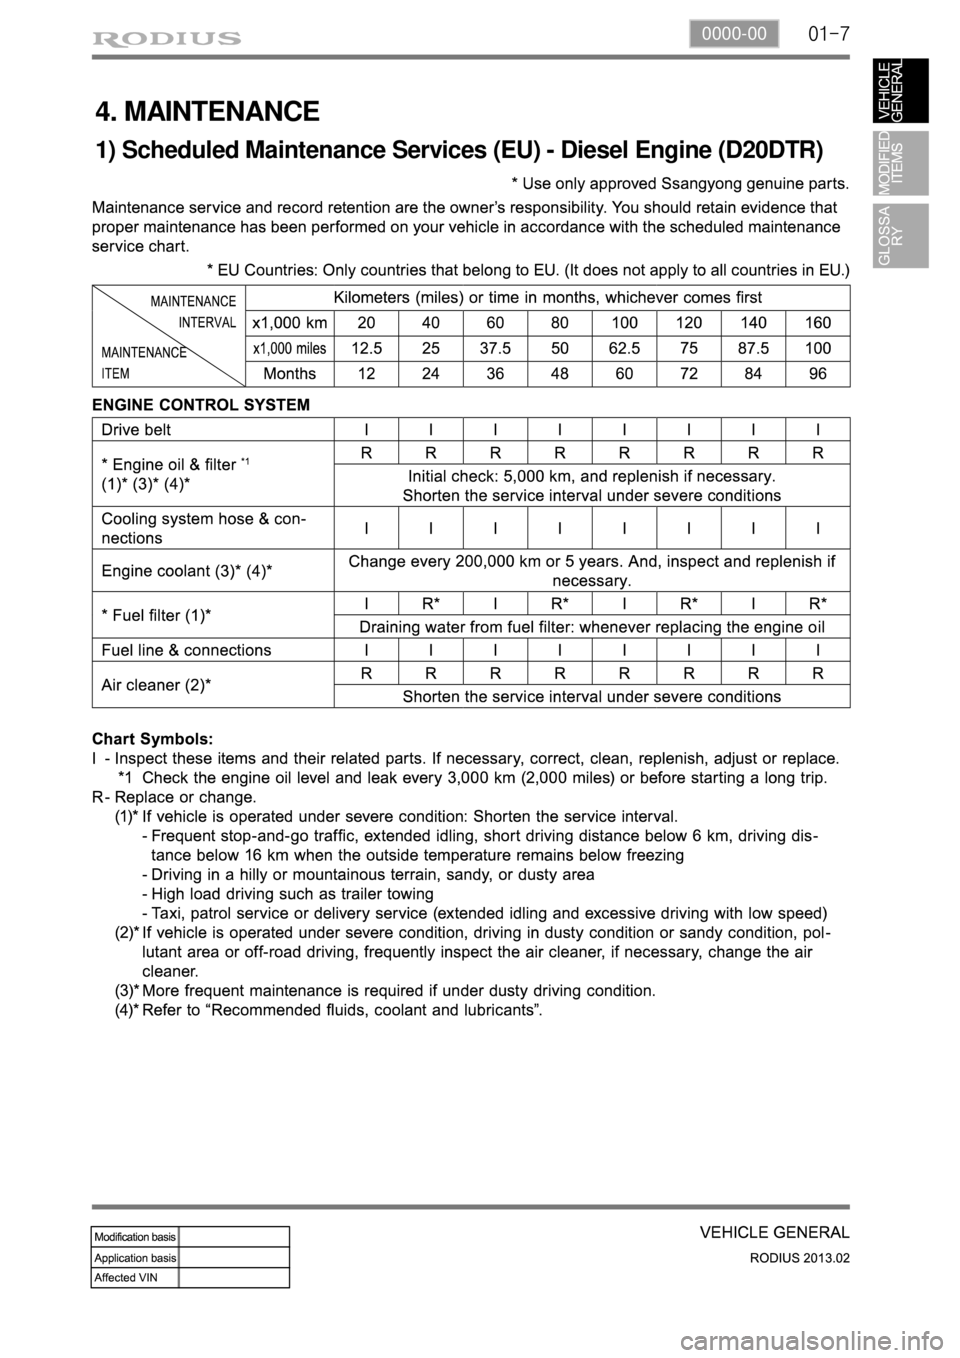 SSANGYONG TURISMO 2013  Service Manual 01-70000-00
4. MAINTENANCE
1) Scheduled Maintenance Services (EU) - Diesel Engine (D20DTR) 